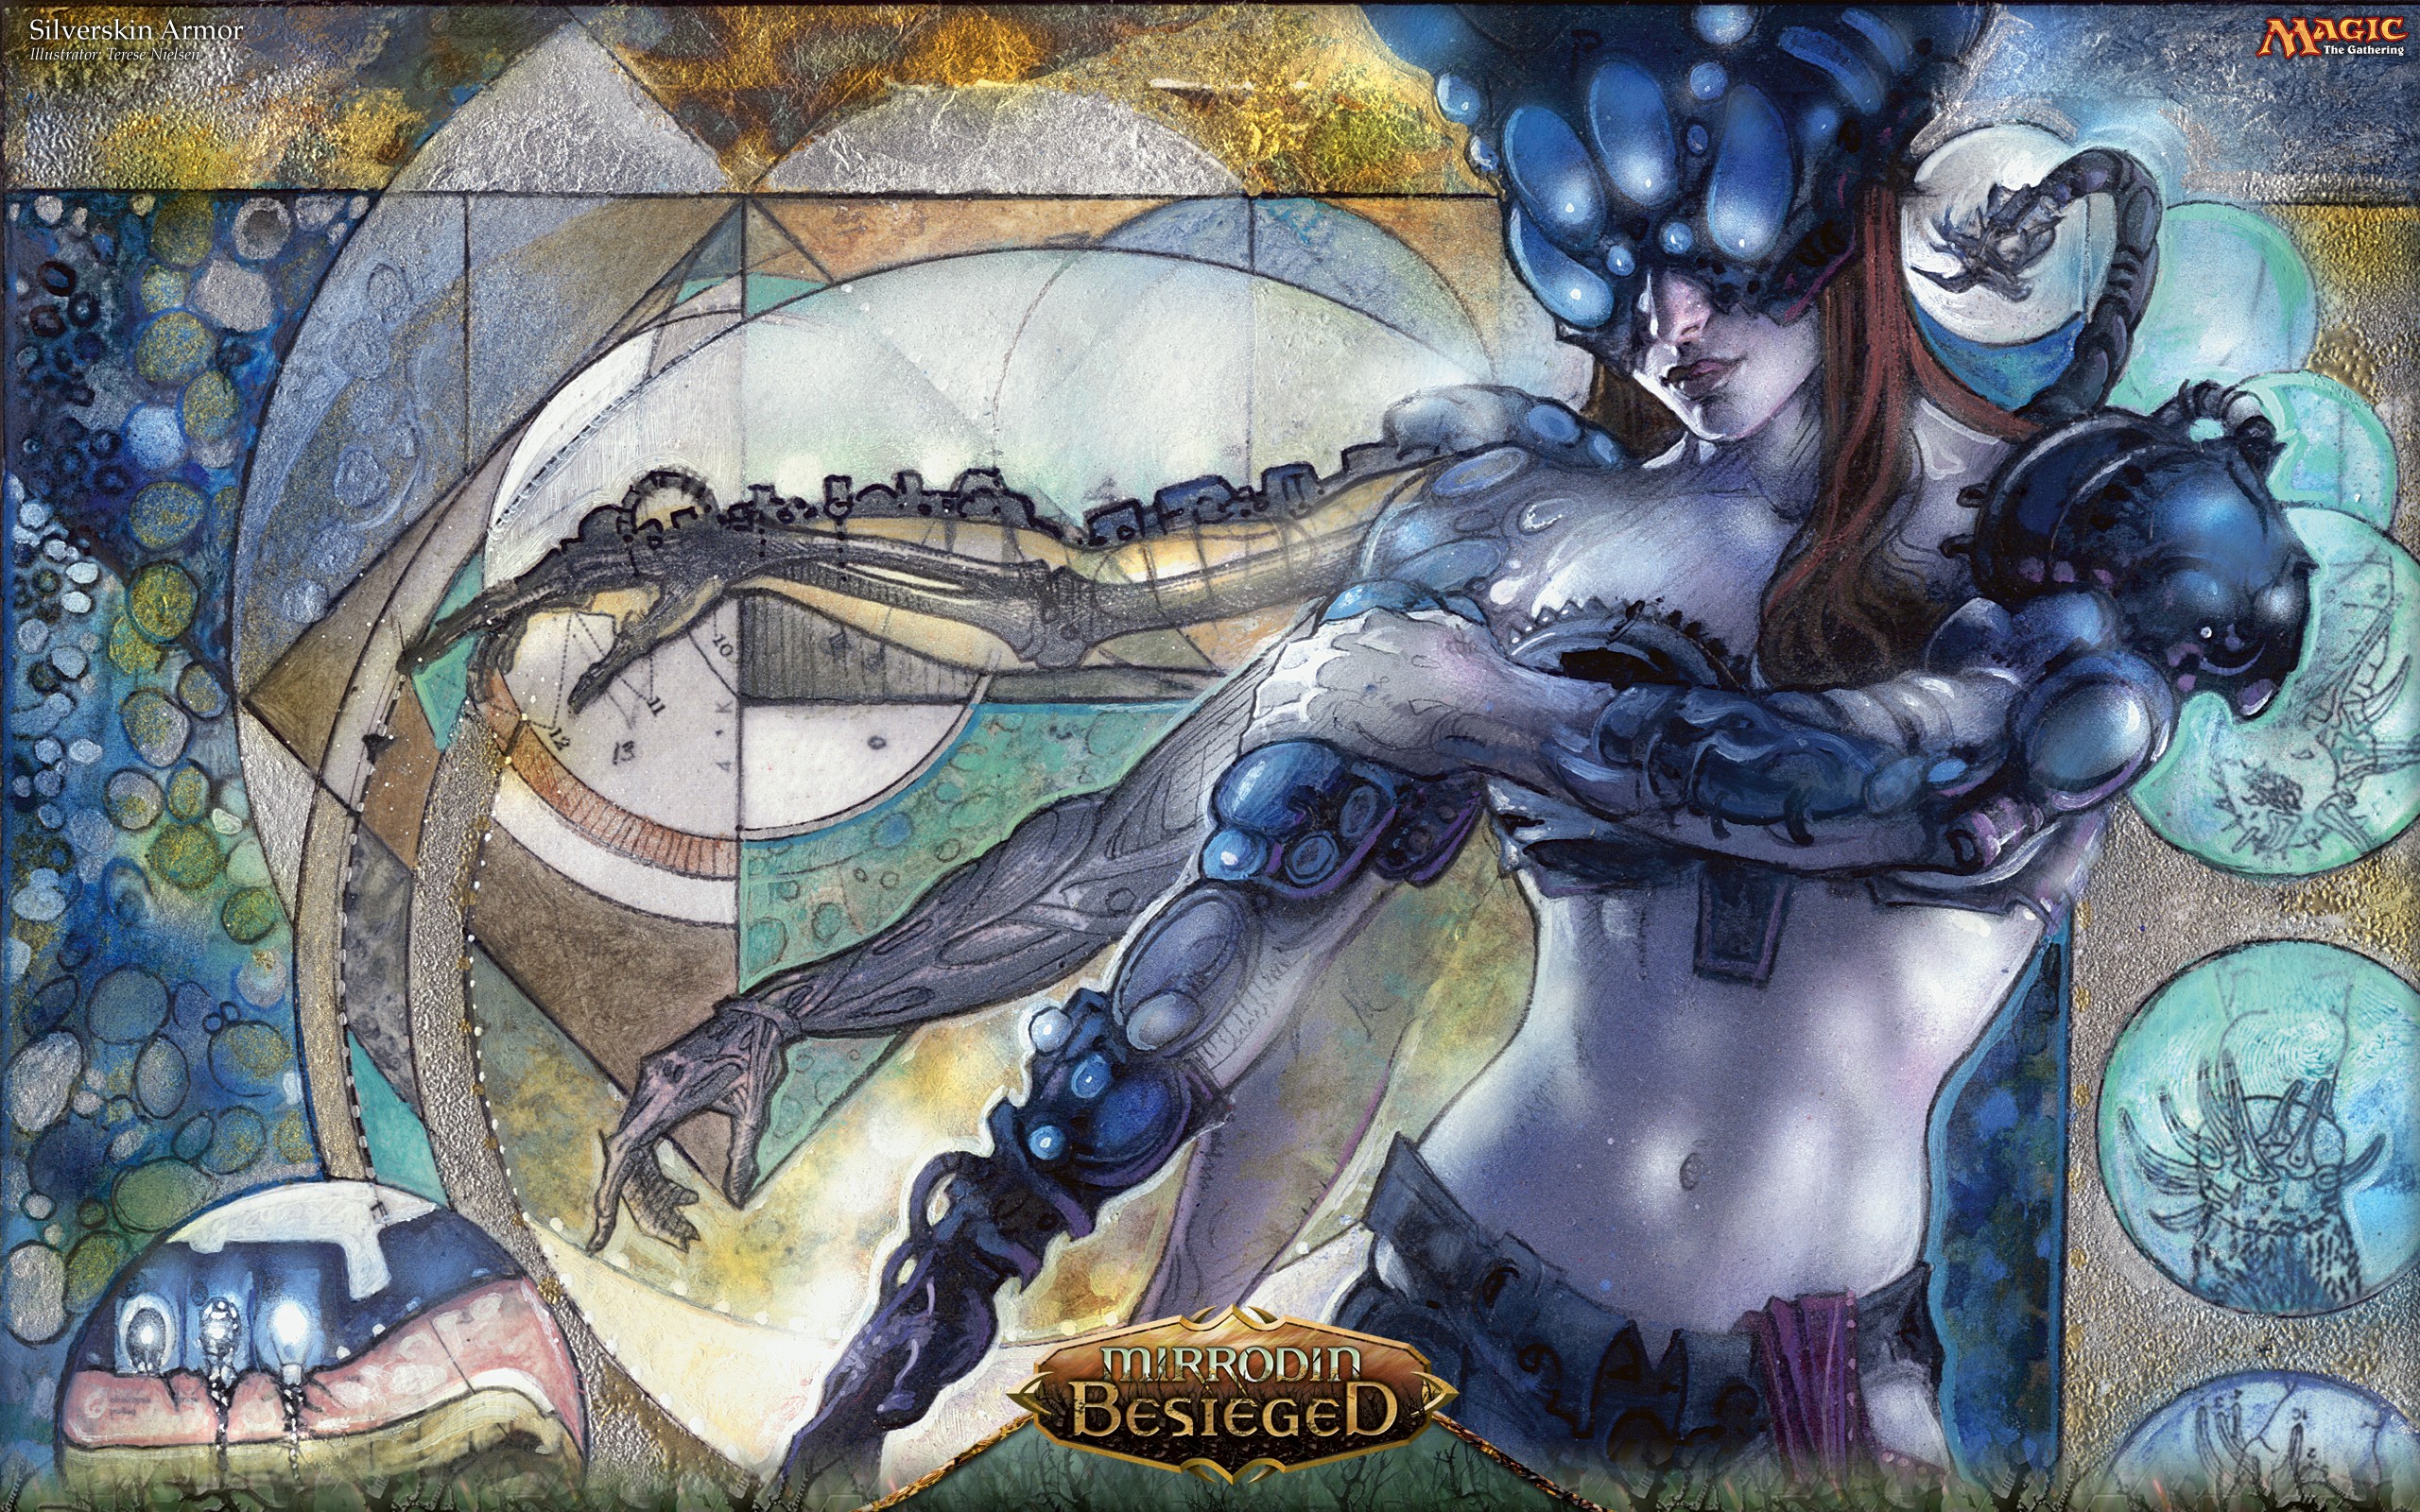 General 2560x1600 gamer Magic: The Gathering fantasy girl fantasy art digital art